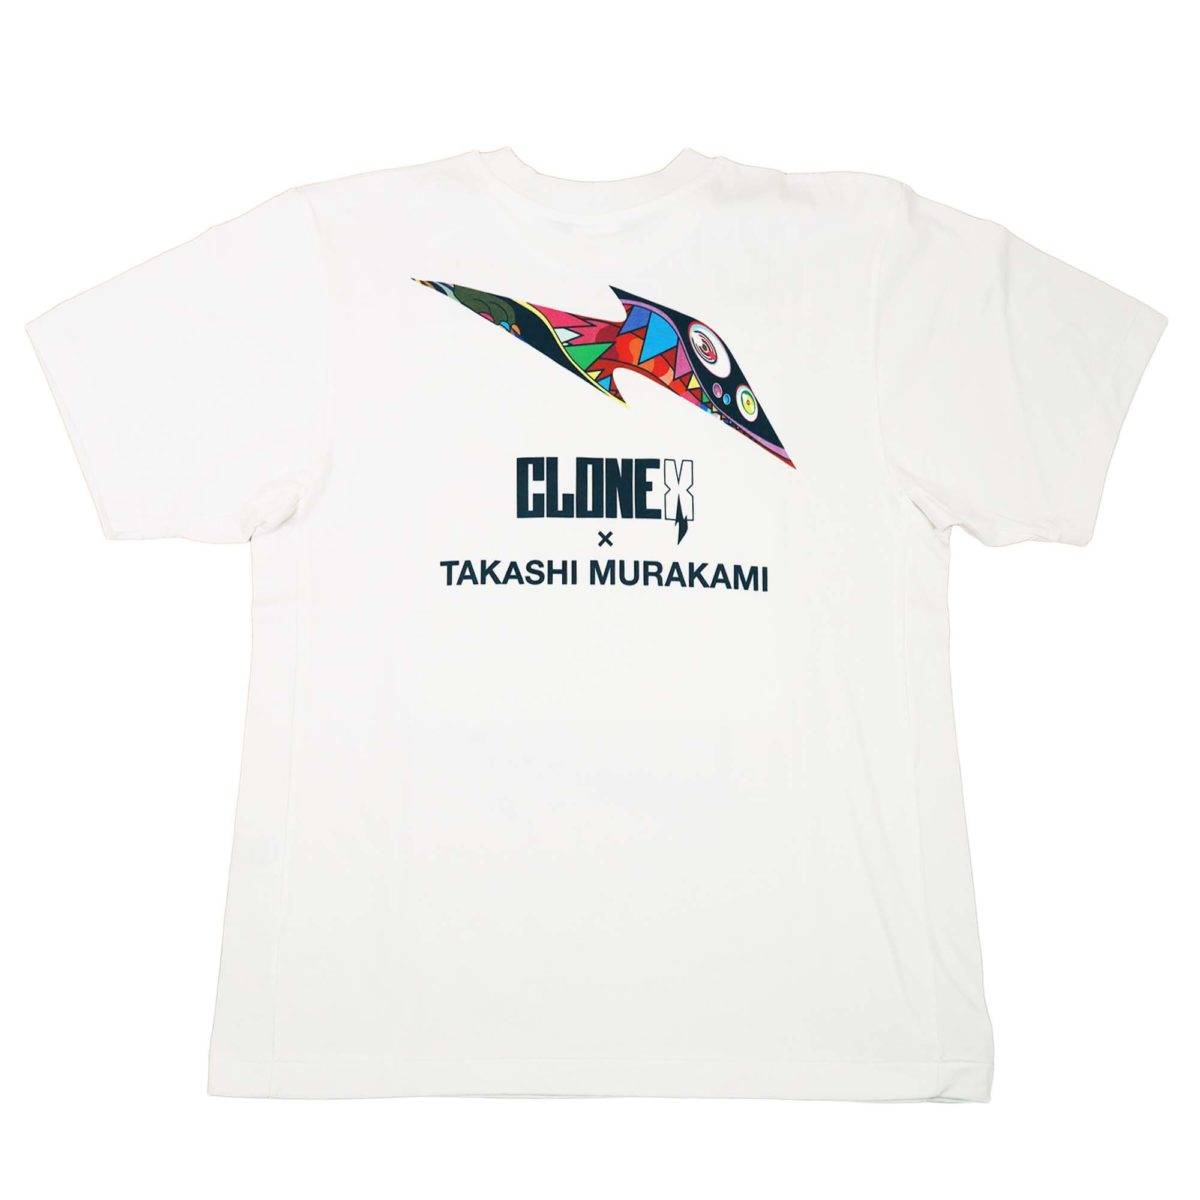 CLONE X × TAKASHI MURAKAMI T-Shirts #2 Lonesome Cowboy -WHITE ...